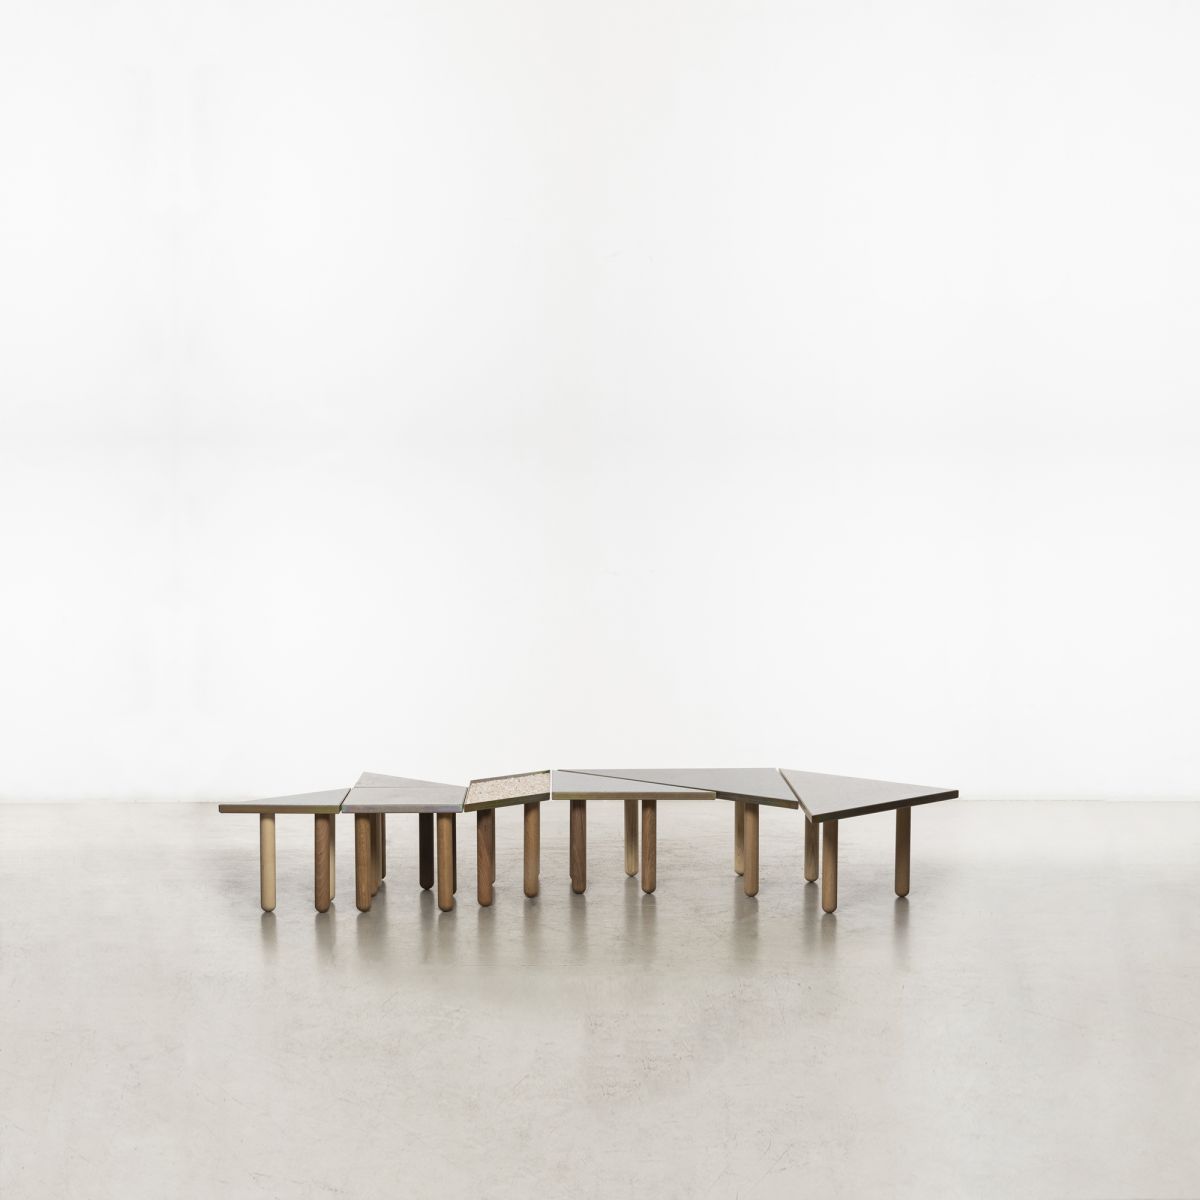 'Tangram' set of low tables Martino Gamper pic-1